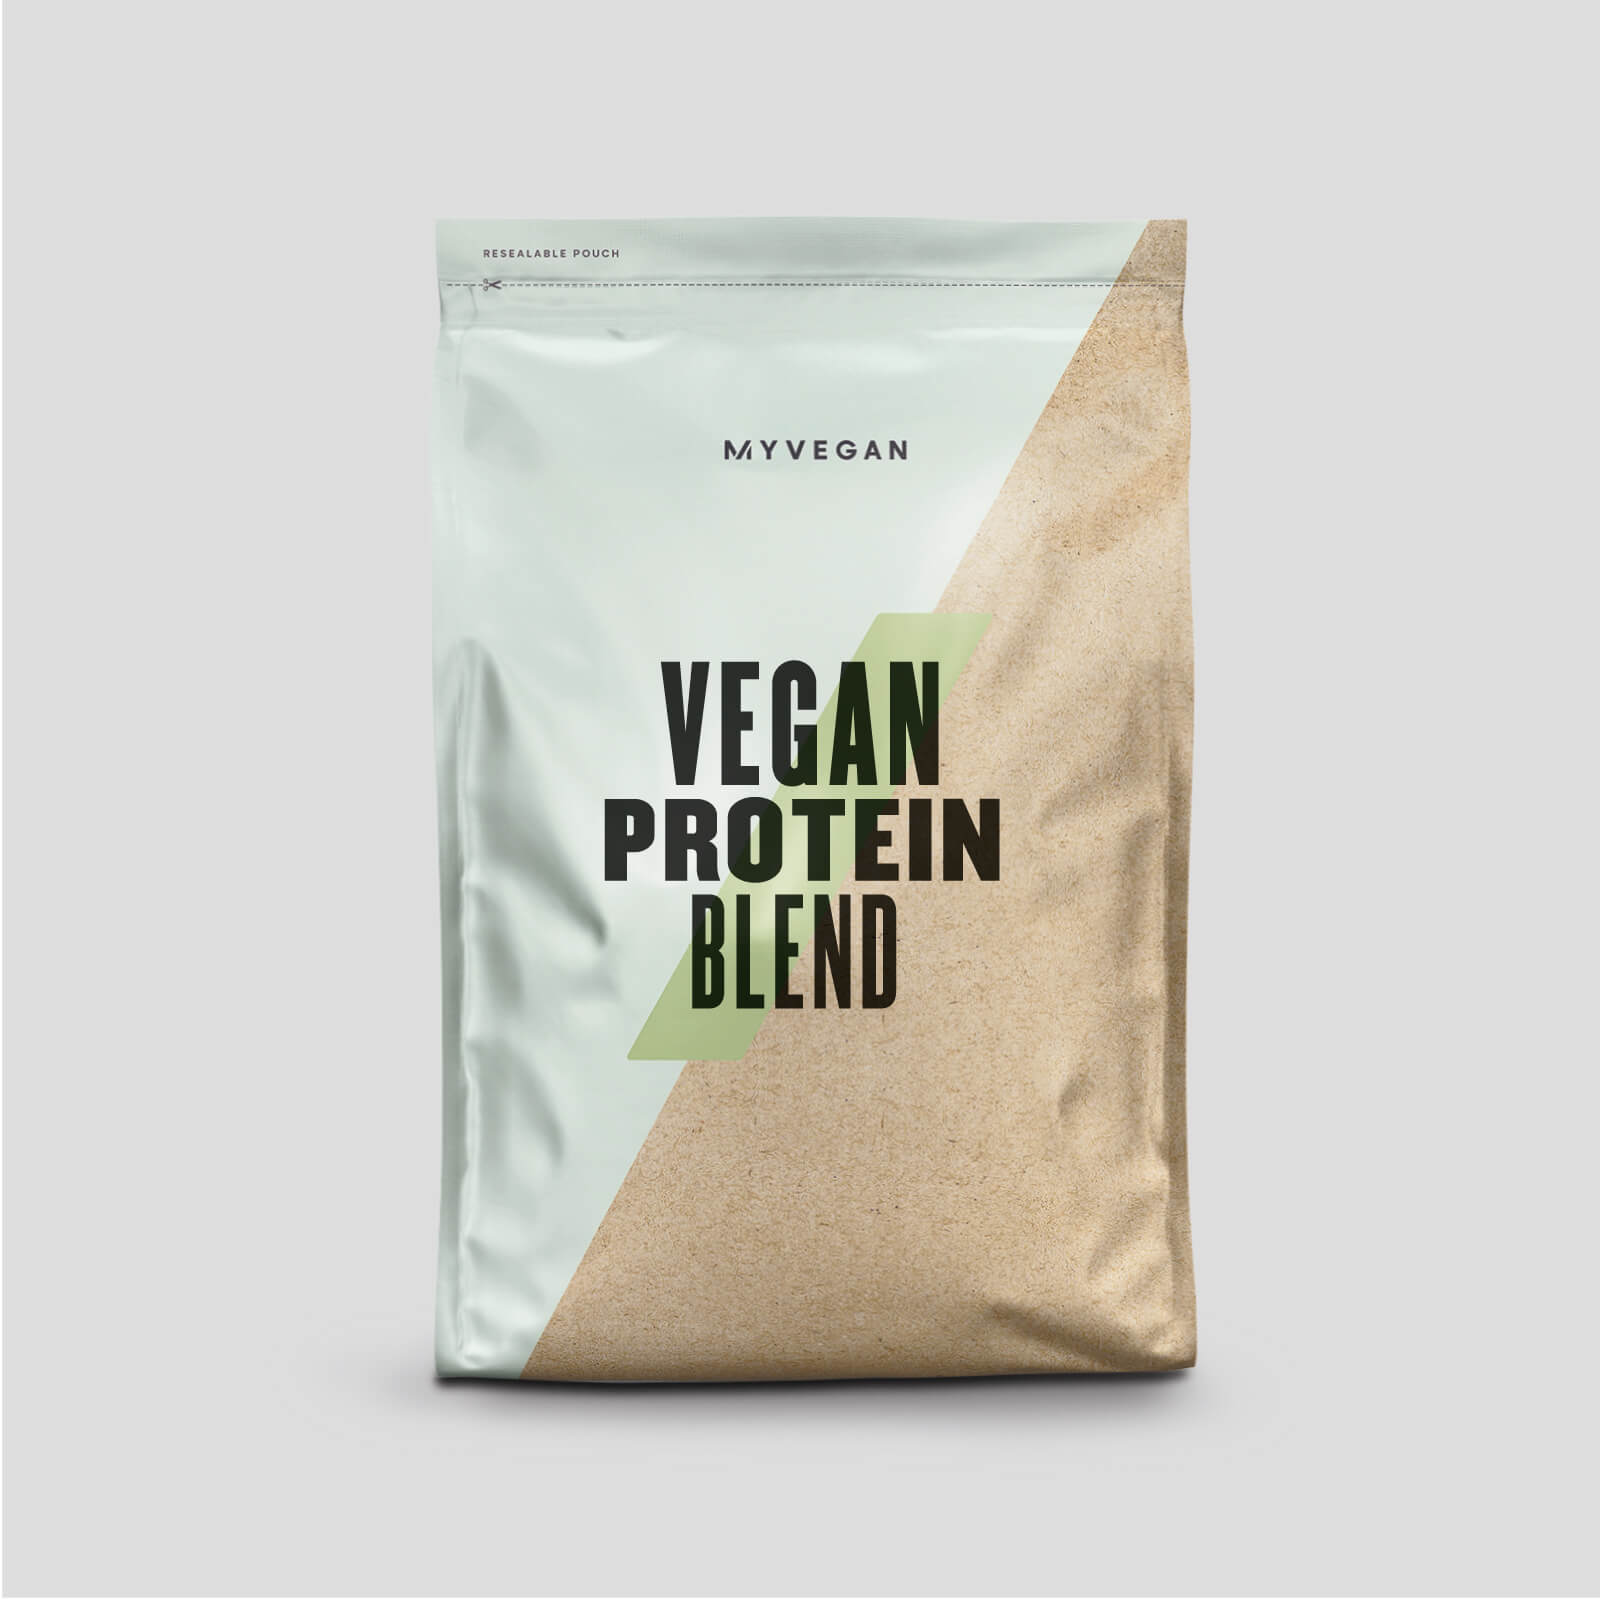 Myvegan Vegan Protein Blend - 250g - Coffee & Walnut